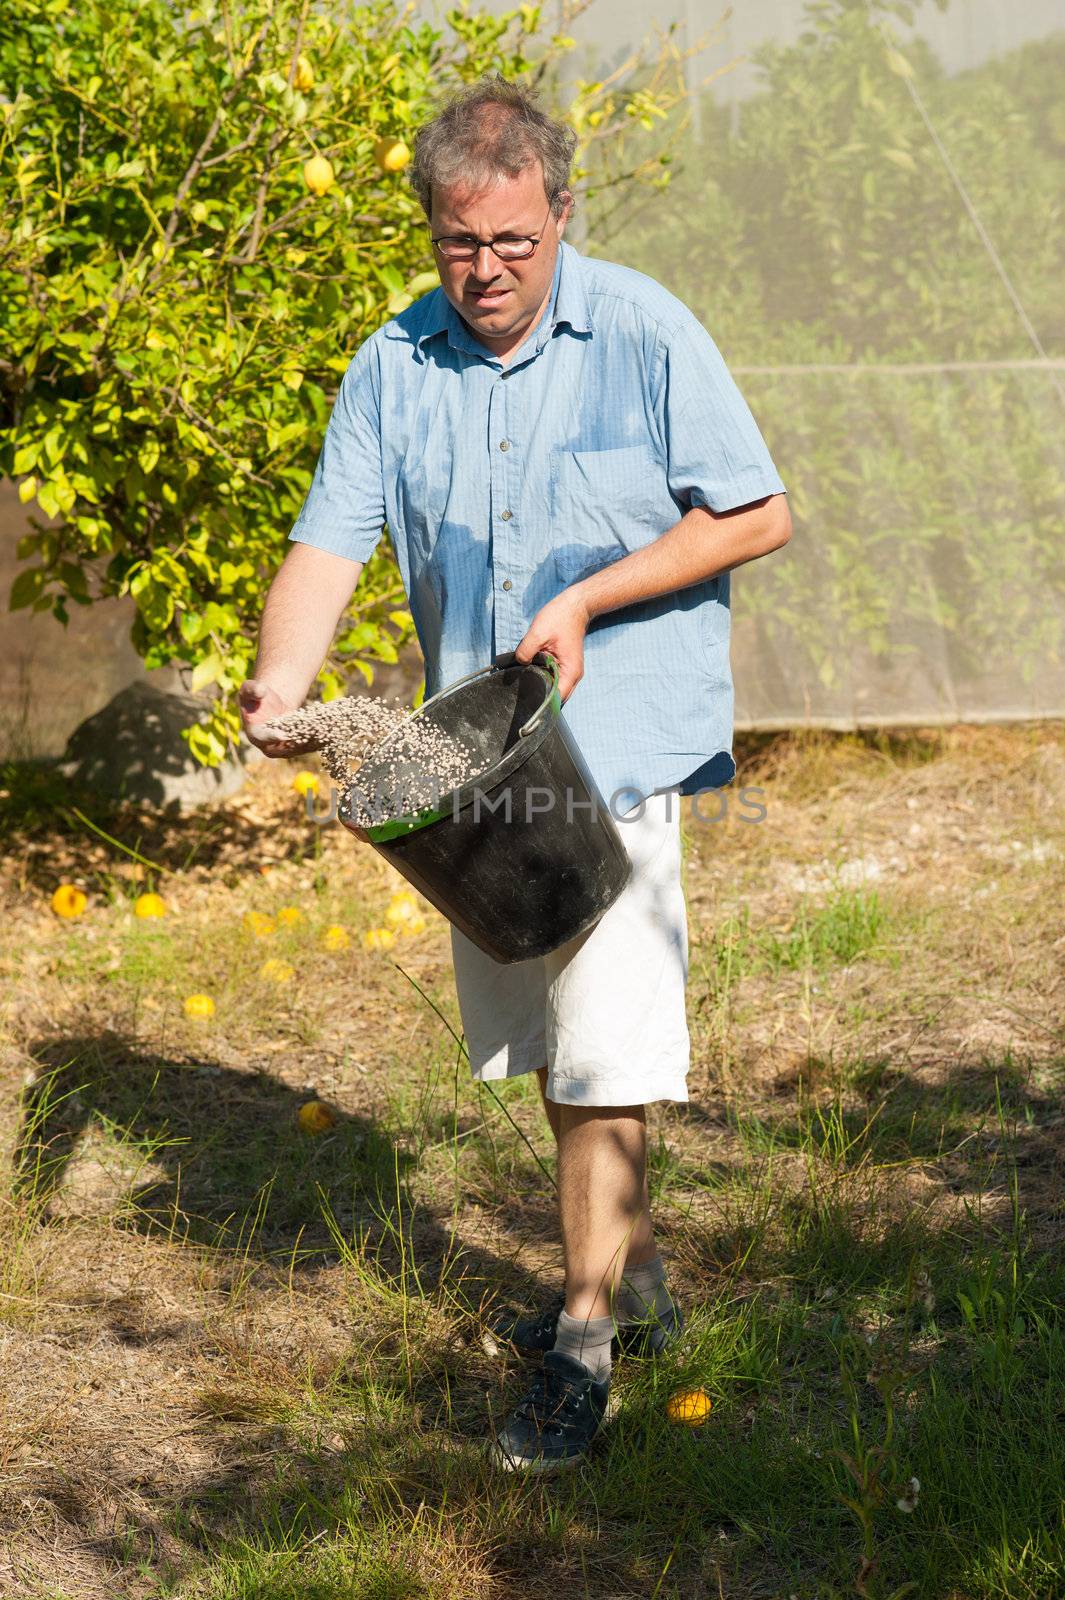 Agricultural worker fertilizing a citrus plantation with phosphate